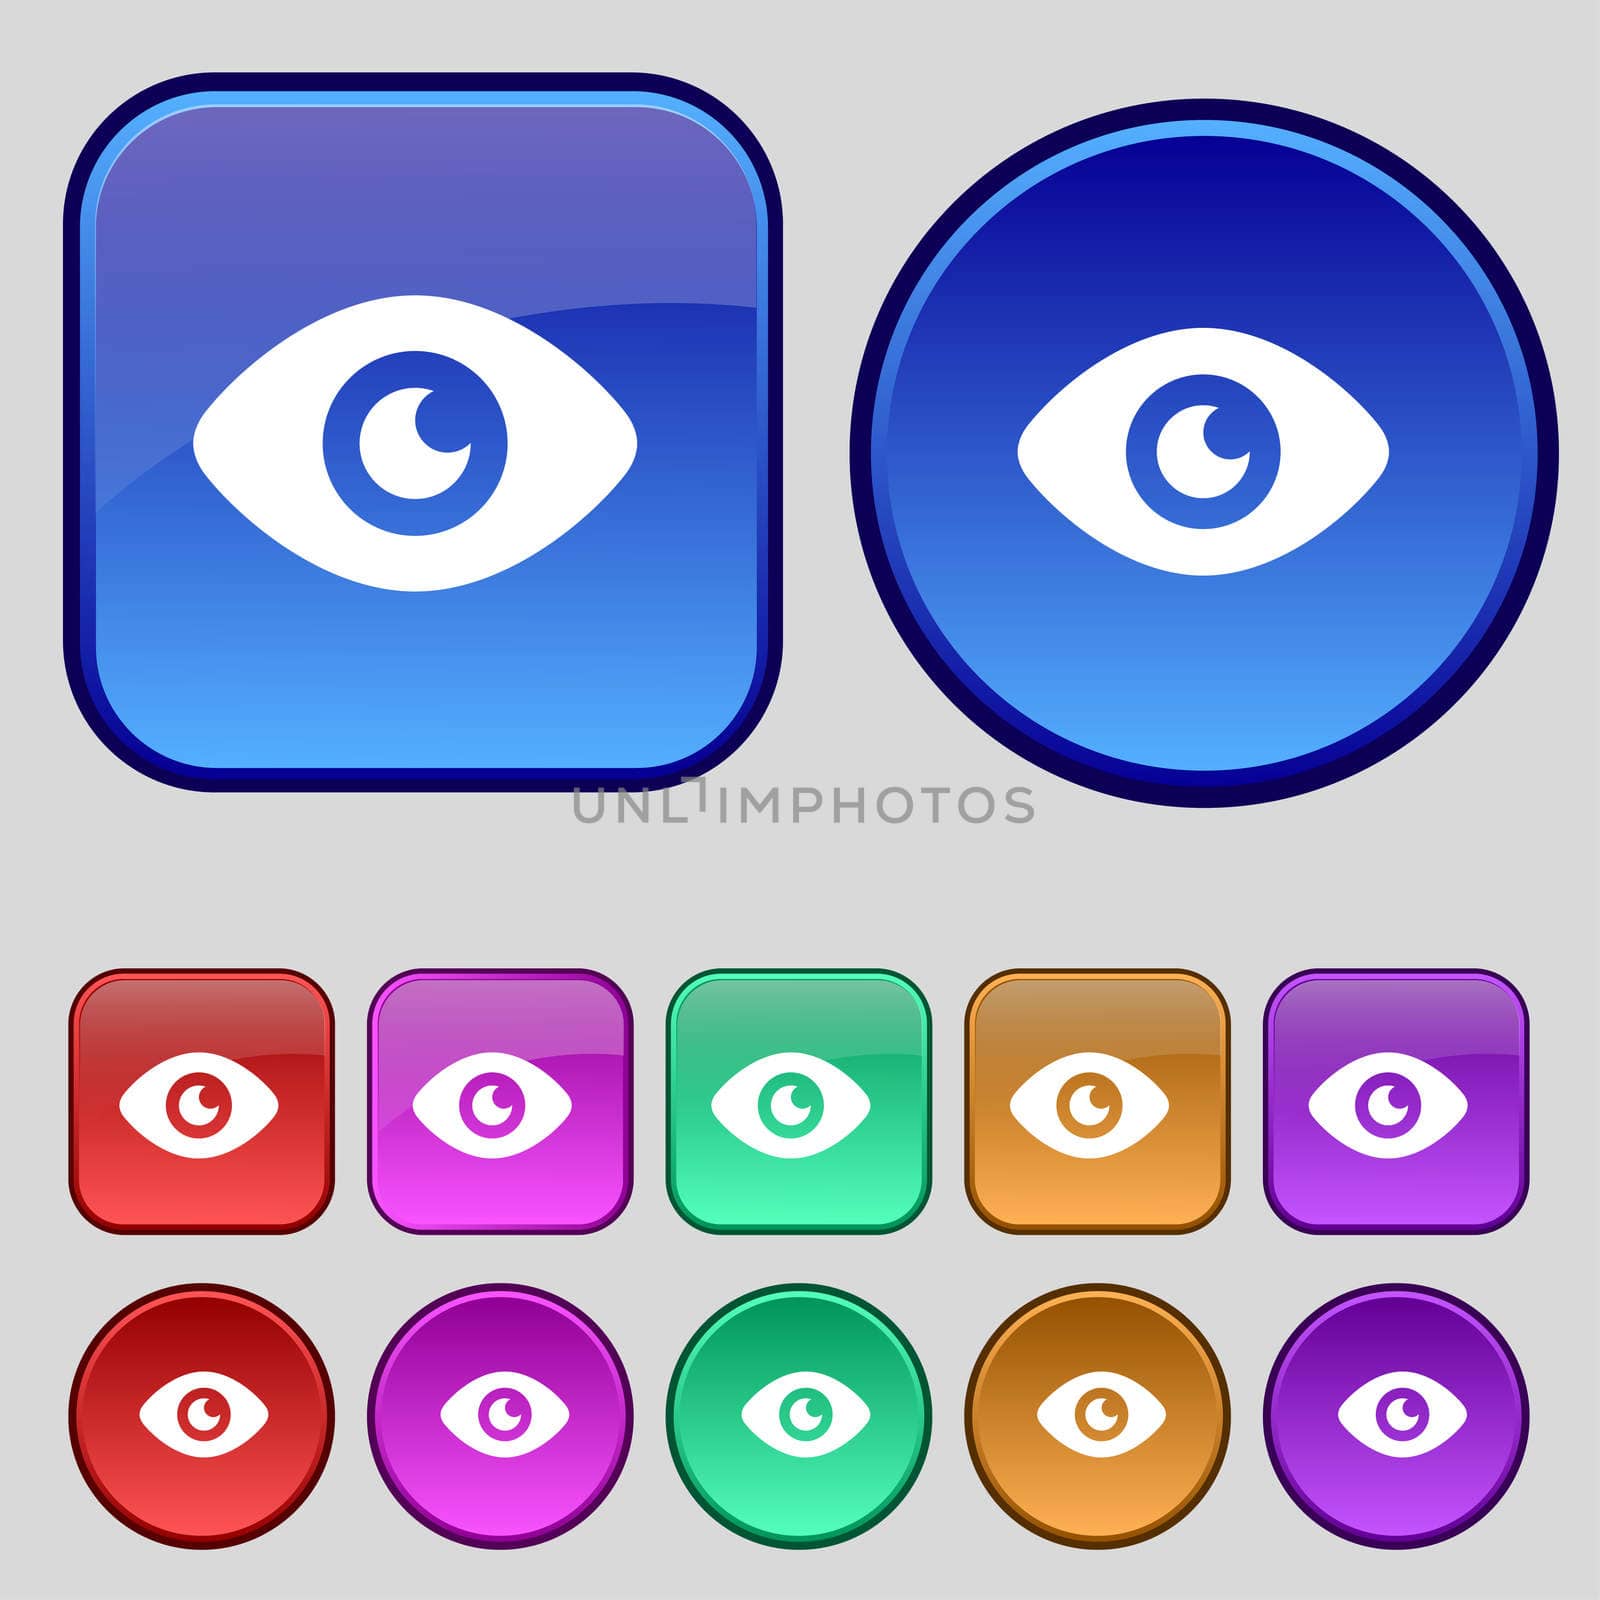 Eye, Publish content icon sign. A set of twelve vintage buttons for your design. illustration